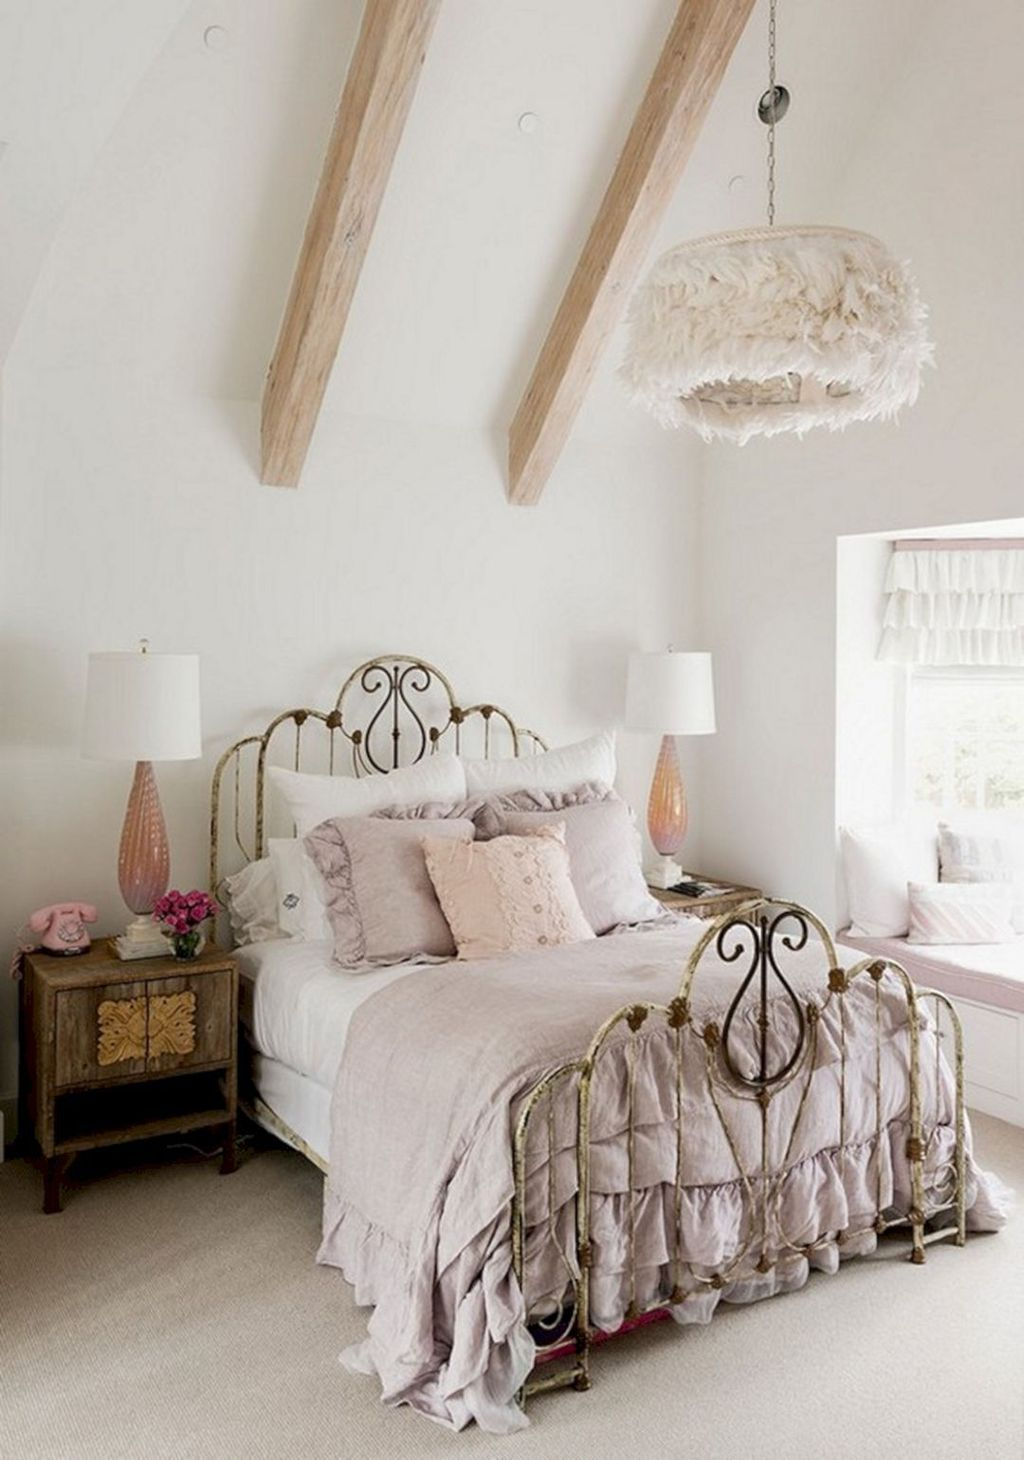 Vintage Nist Bedroom Decoration Ideas That Look More Beautiful25